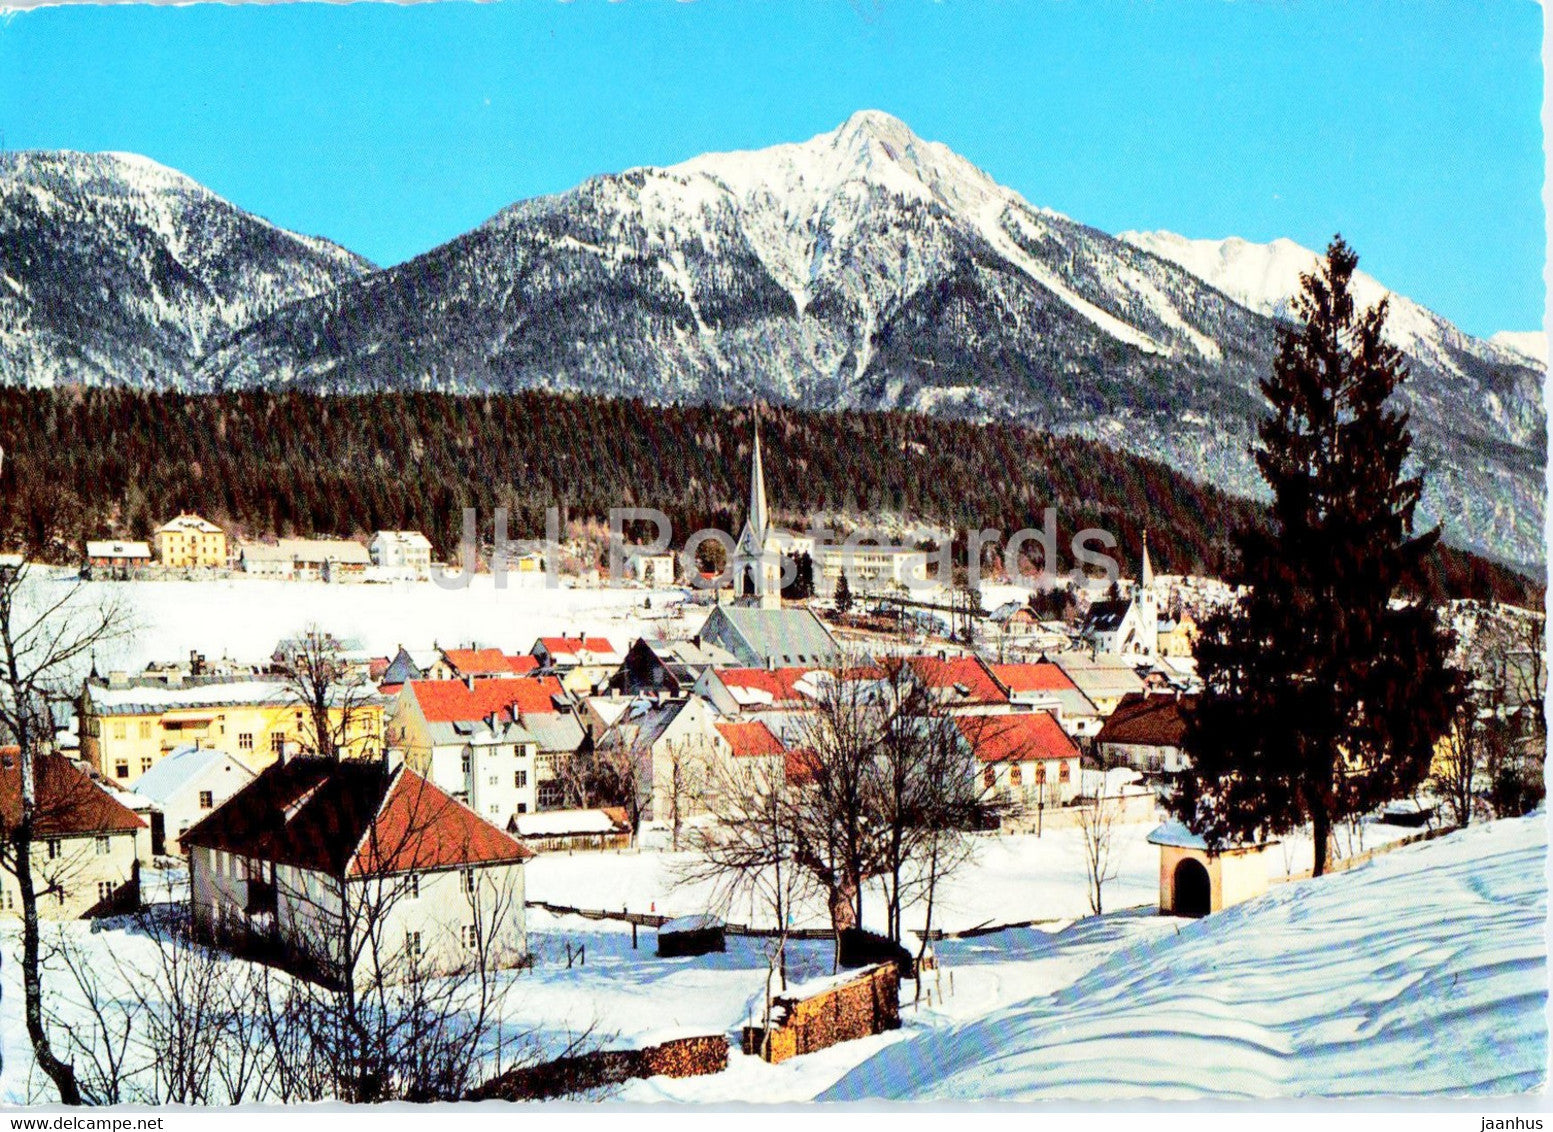 Wintersportplatz Hermagor im Gailtal gegen Spitzegel 2118 m - 1975 - Austria - used - JH Postcards